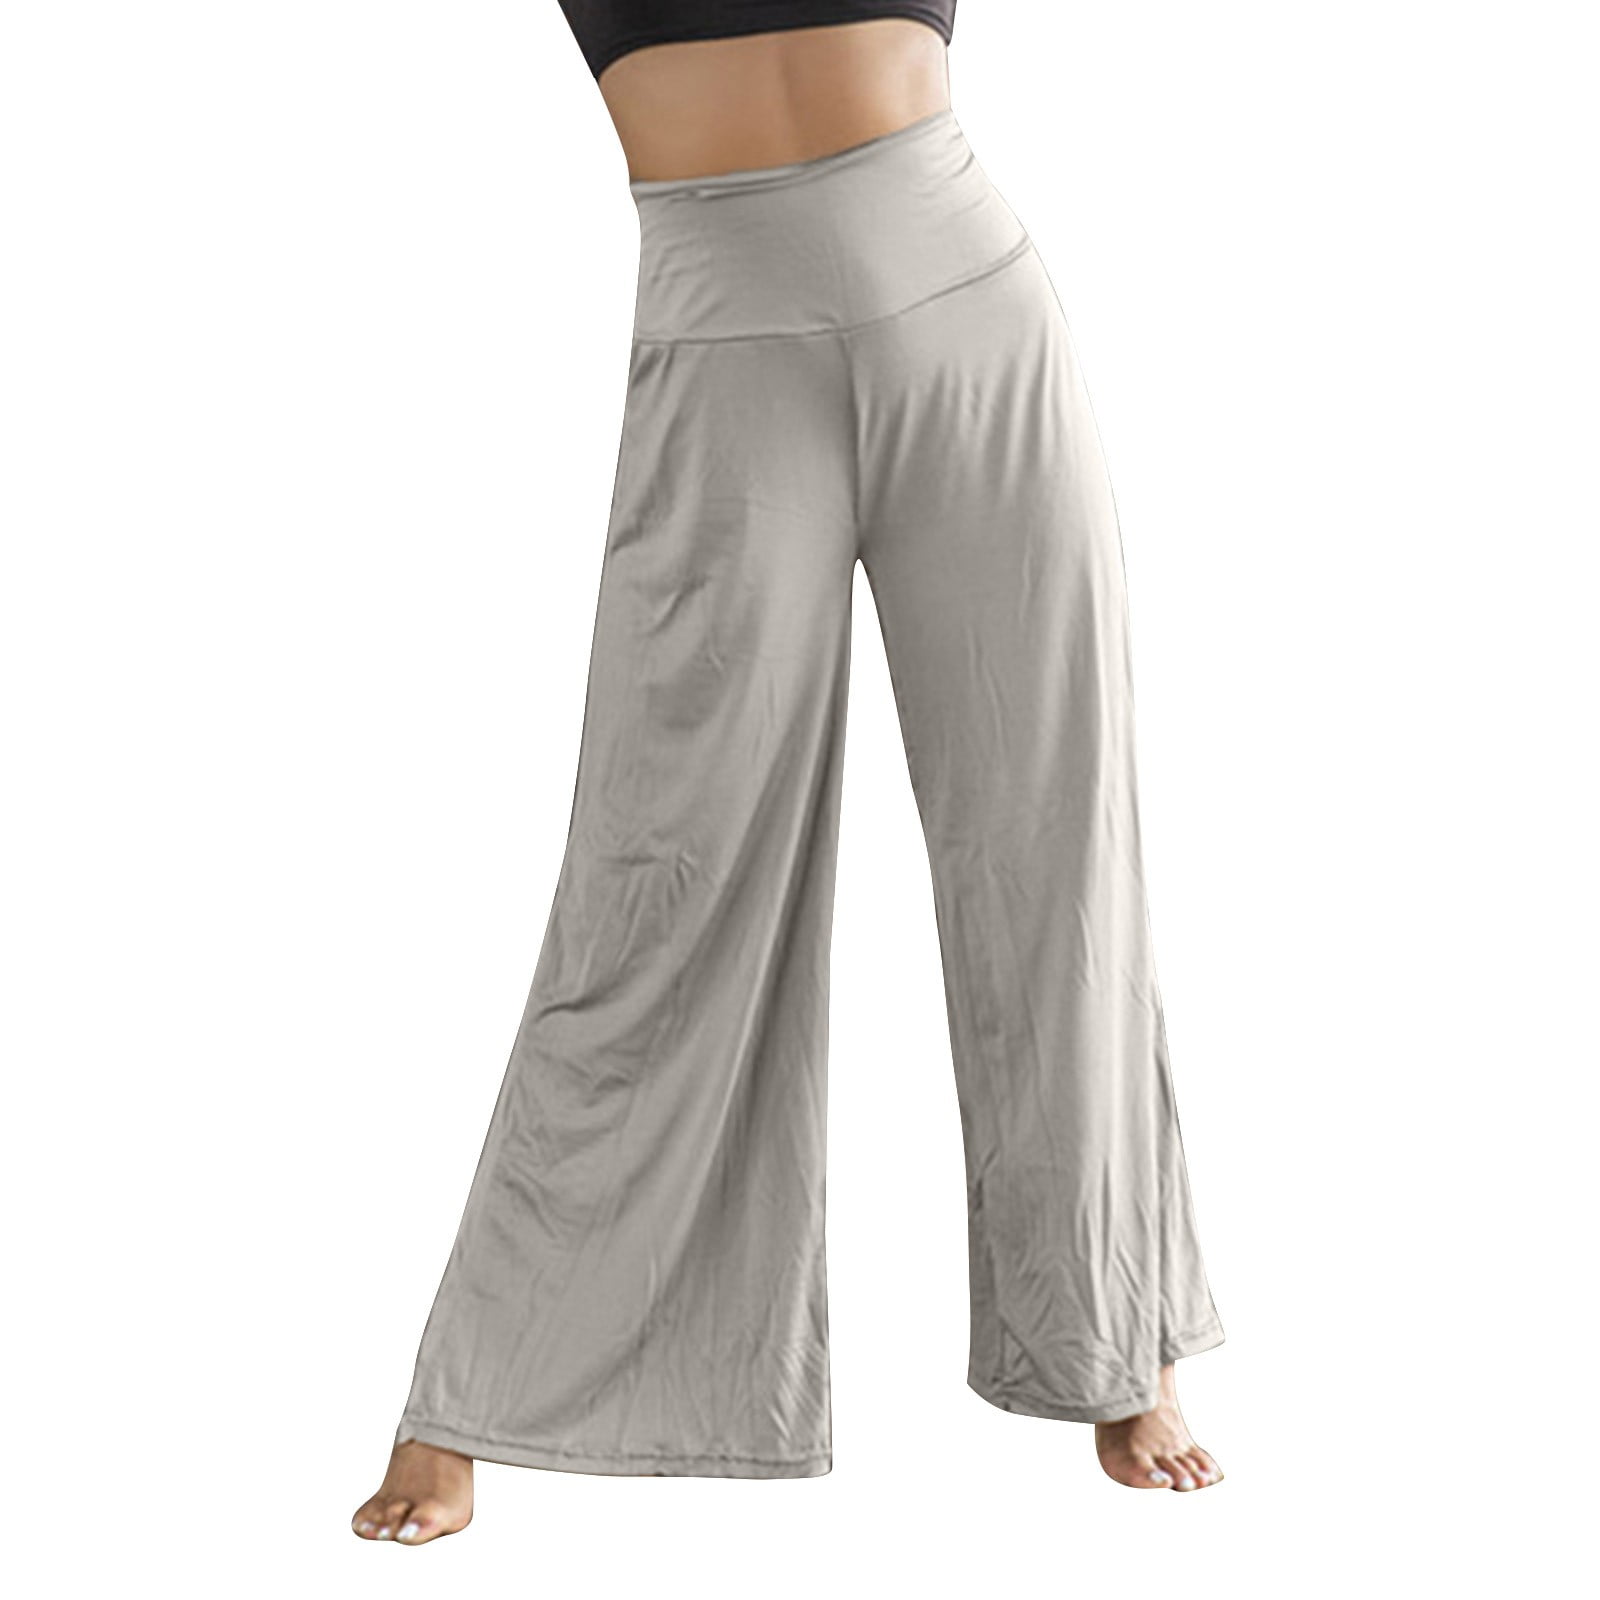 2DXuixsh Plus Size Yoga Pants for Women 3X Lift Womens Casual